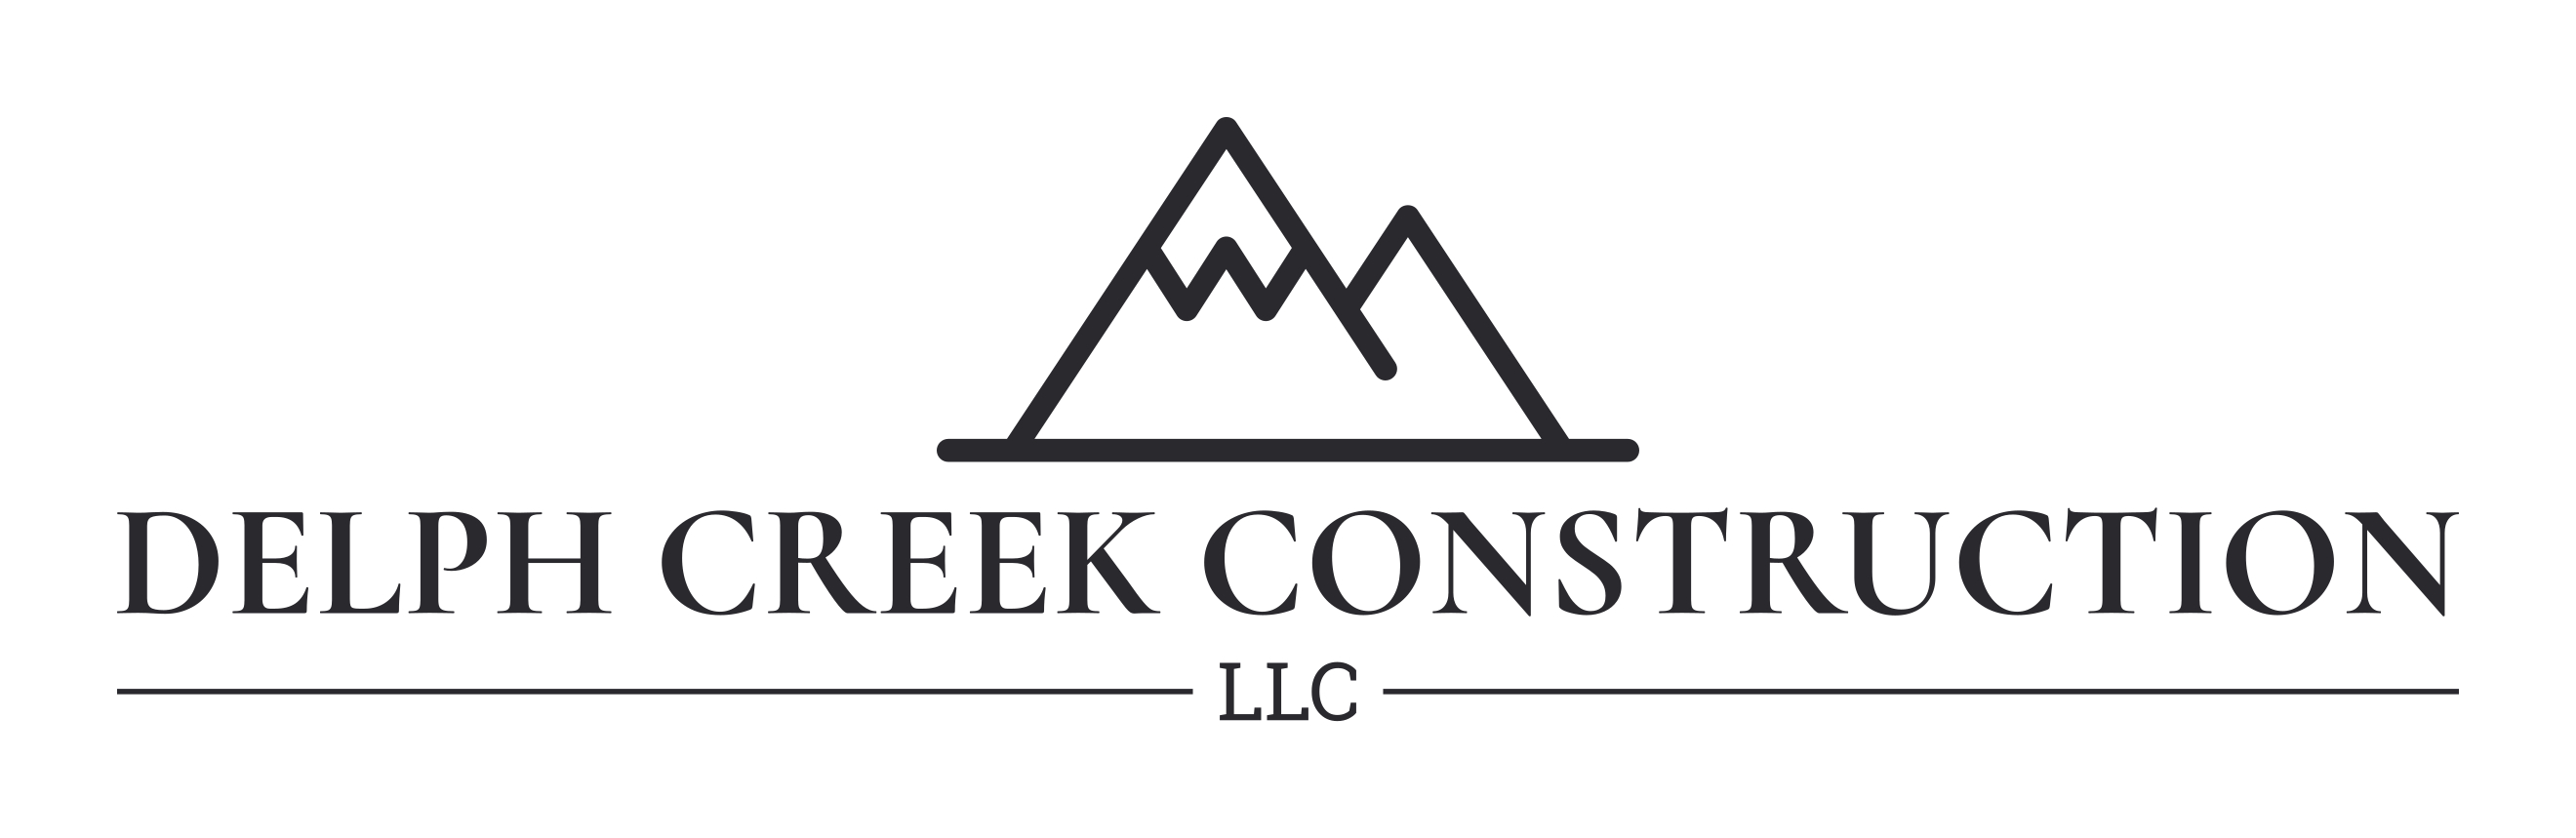 Delph Creek Construction, LLC Logo